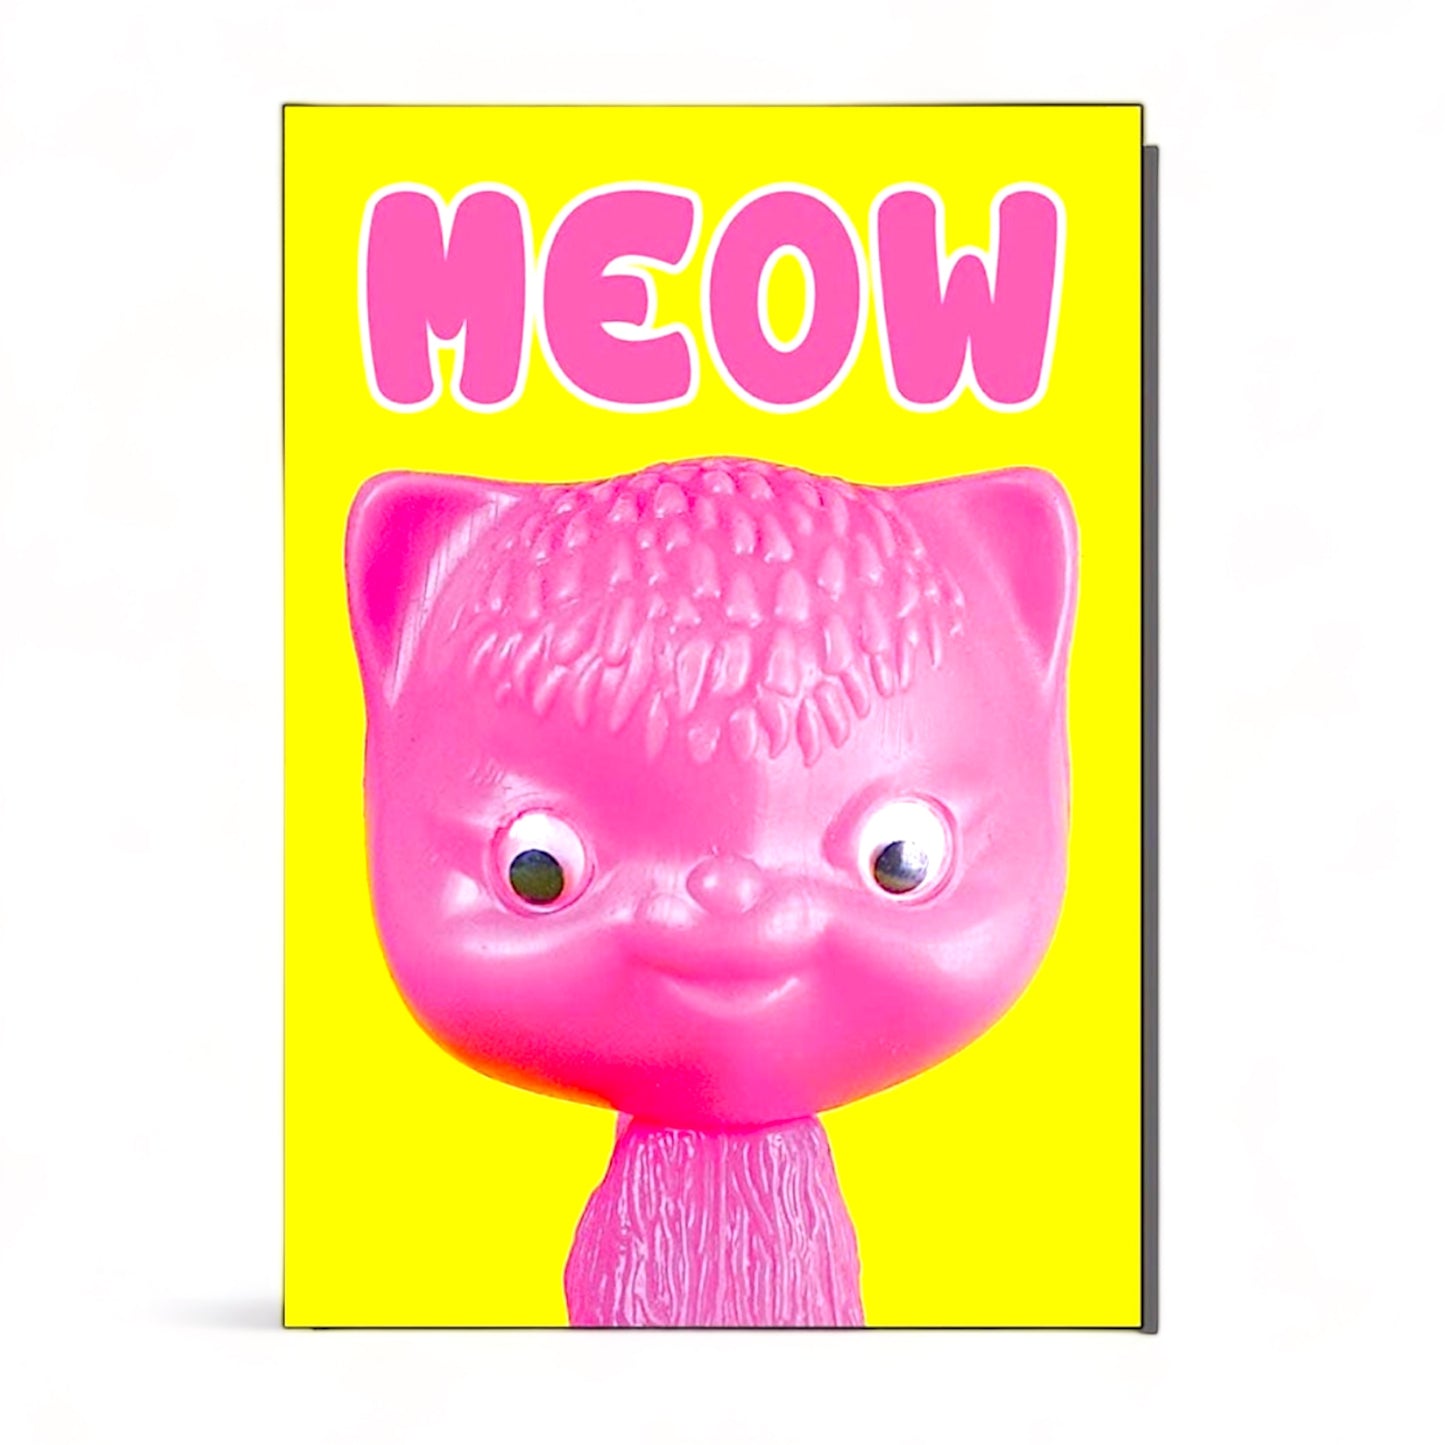 Meow - Greeting Card